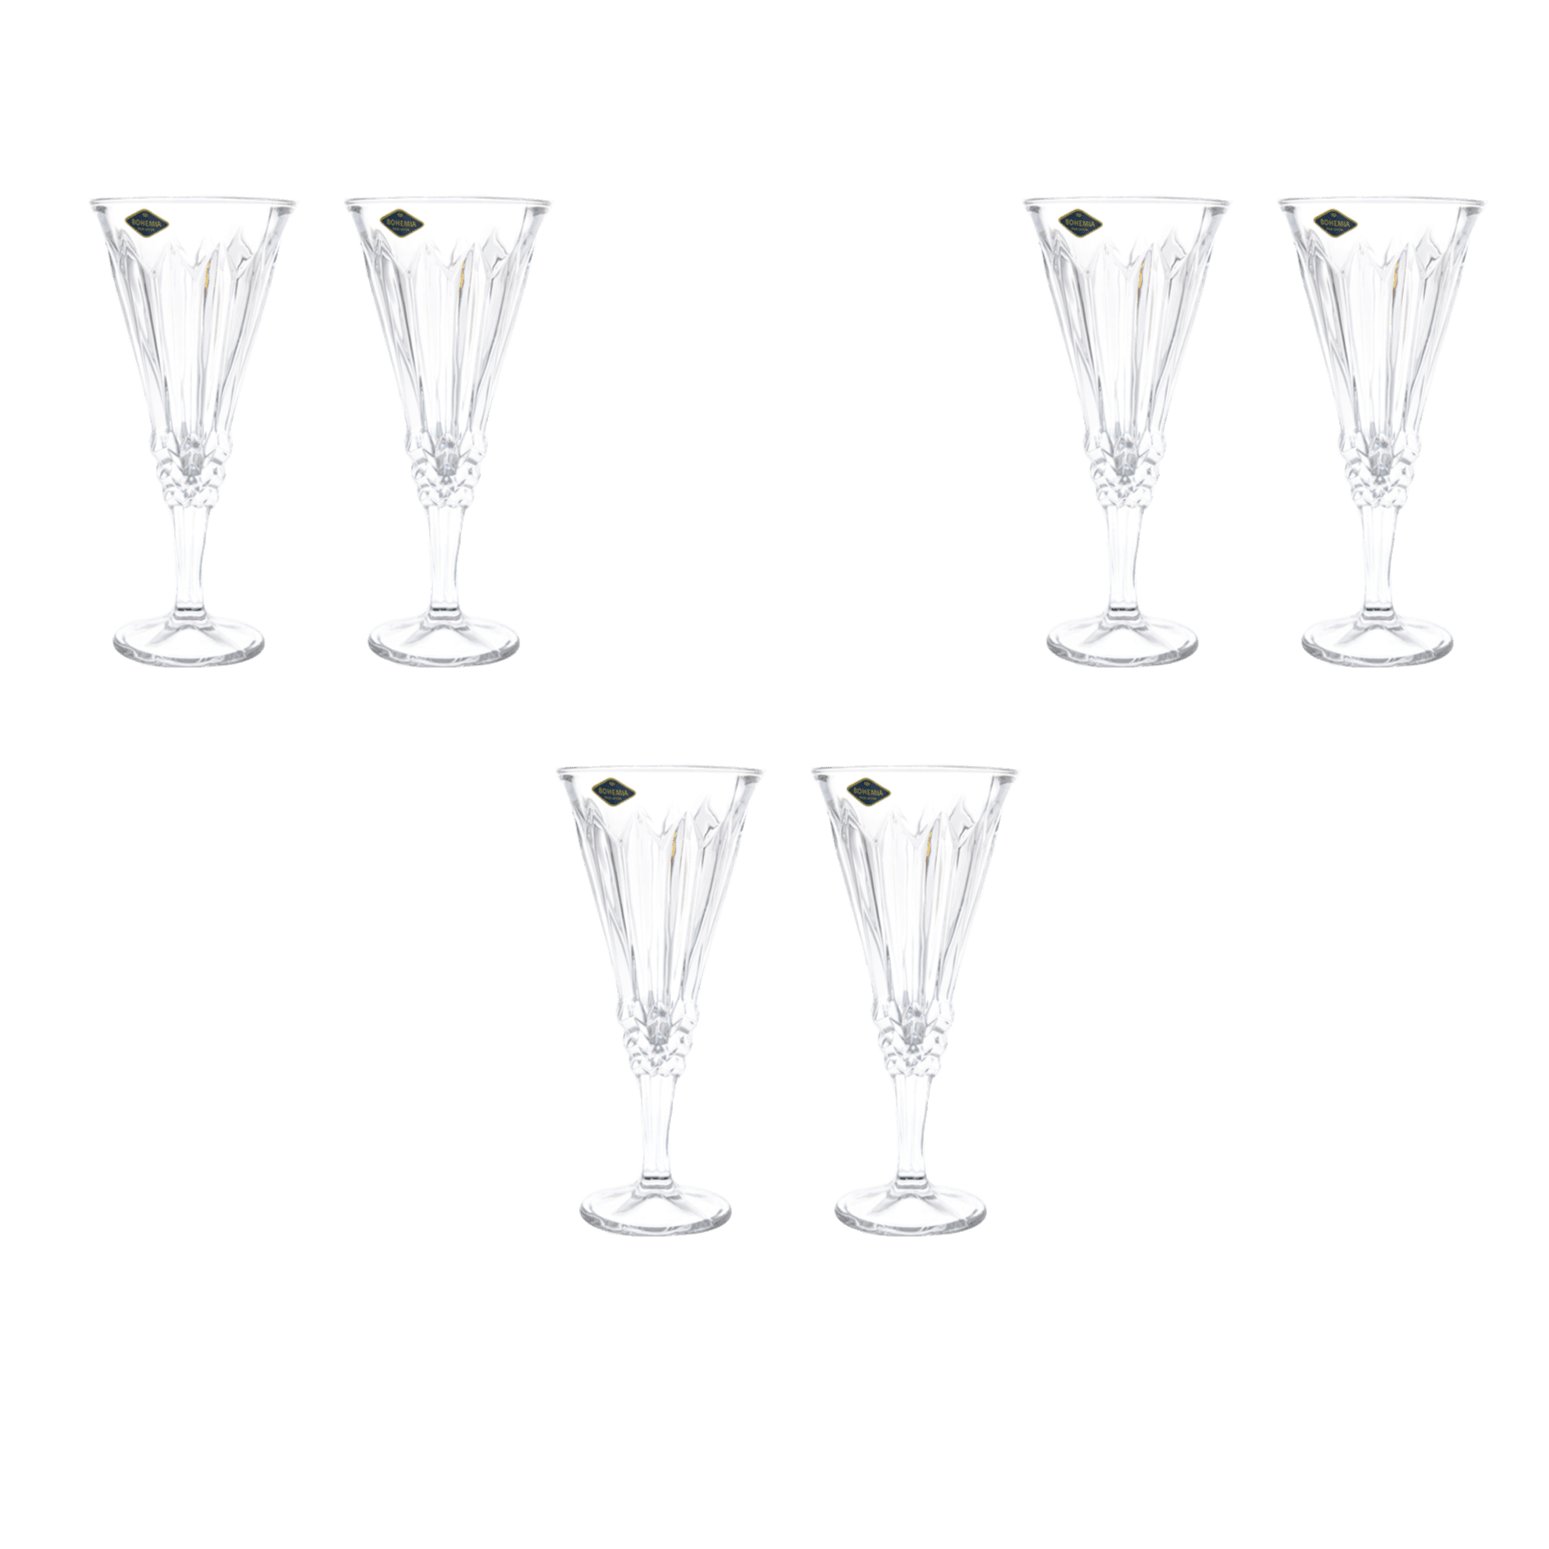 Bohemia Crystal - Goblet Glass Set 6 Pieces - 250ml - 2700010792